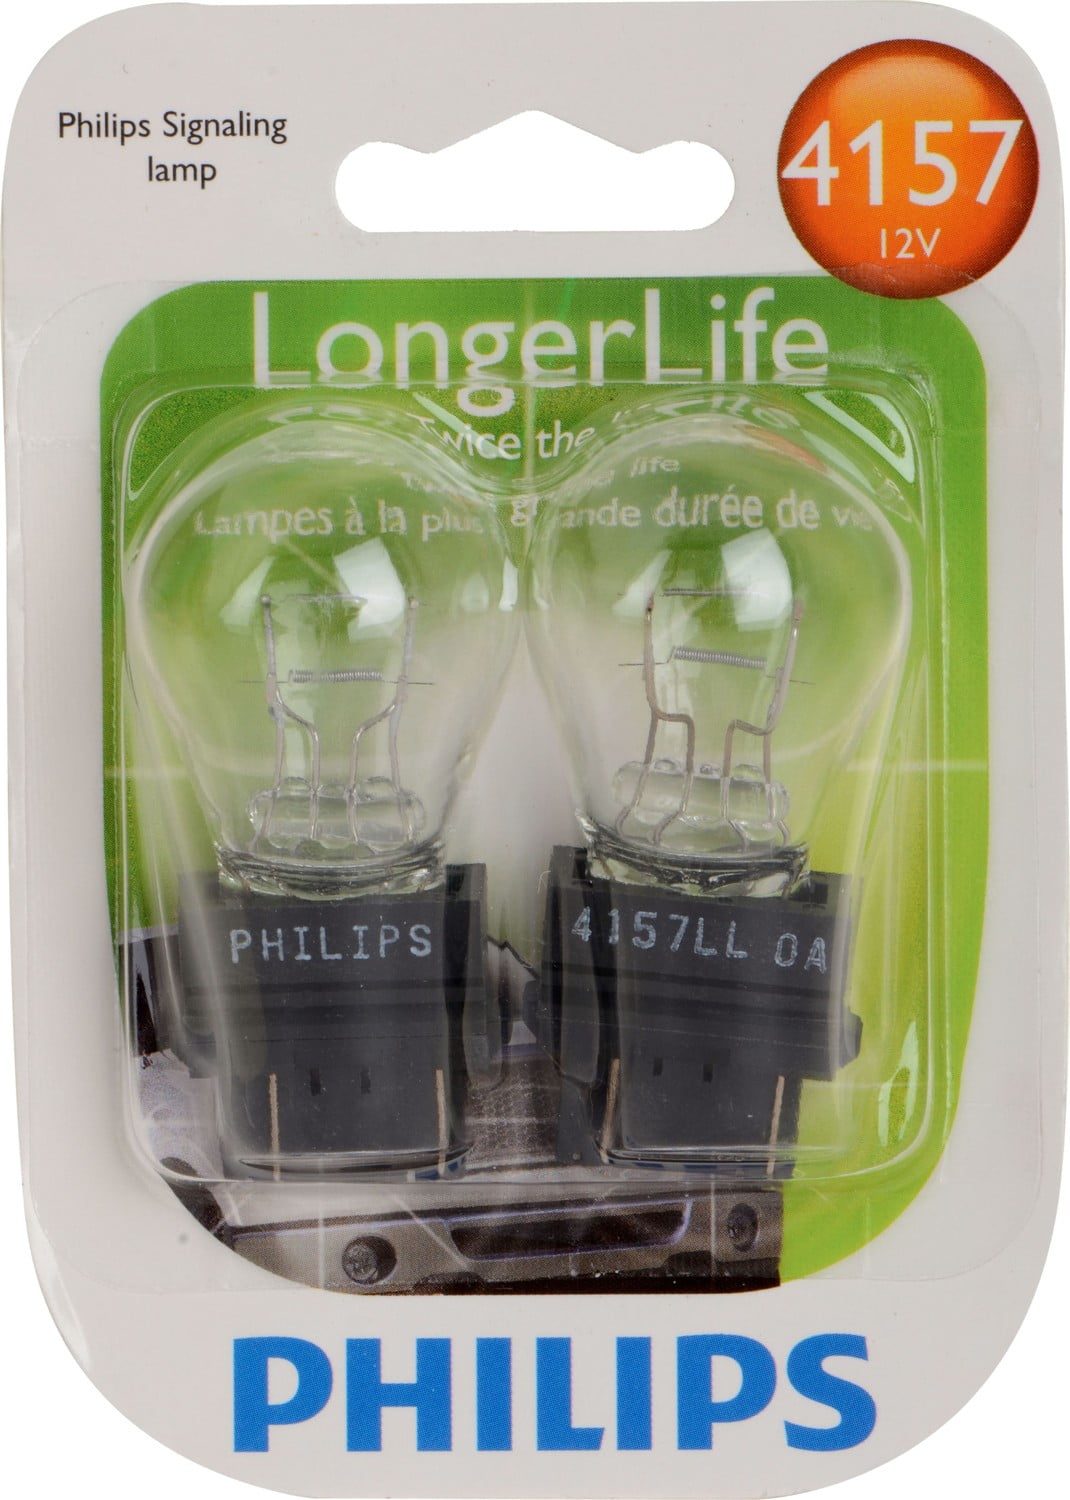 Philips Longerlife Miniature 4157Ll, Clear, Push Type, Always